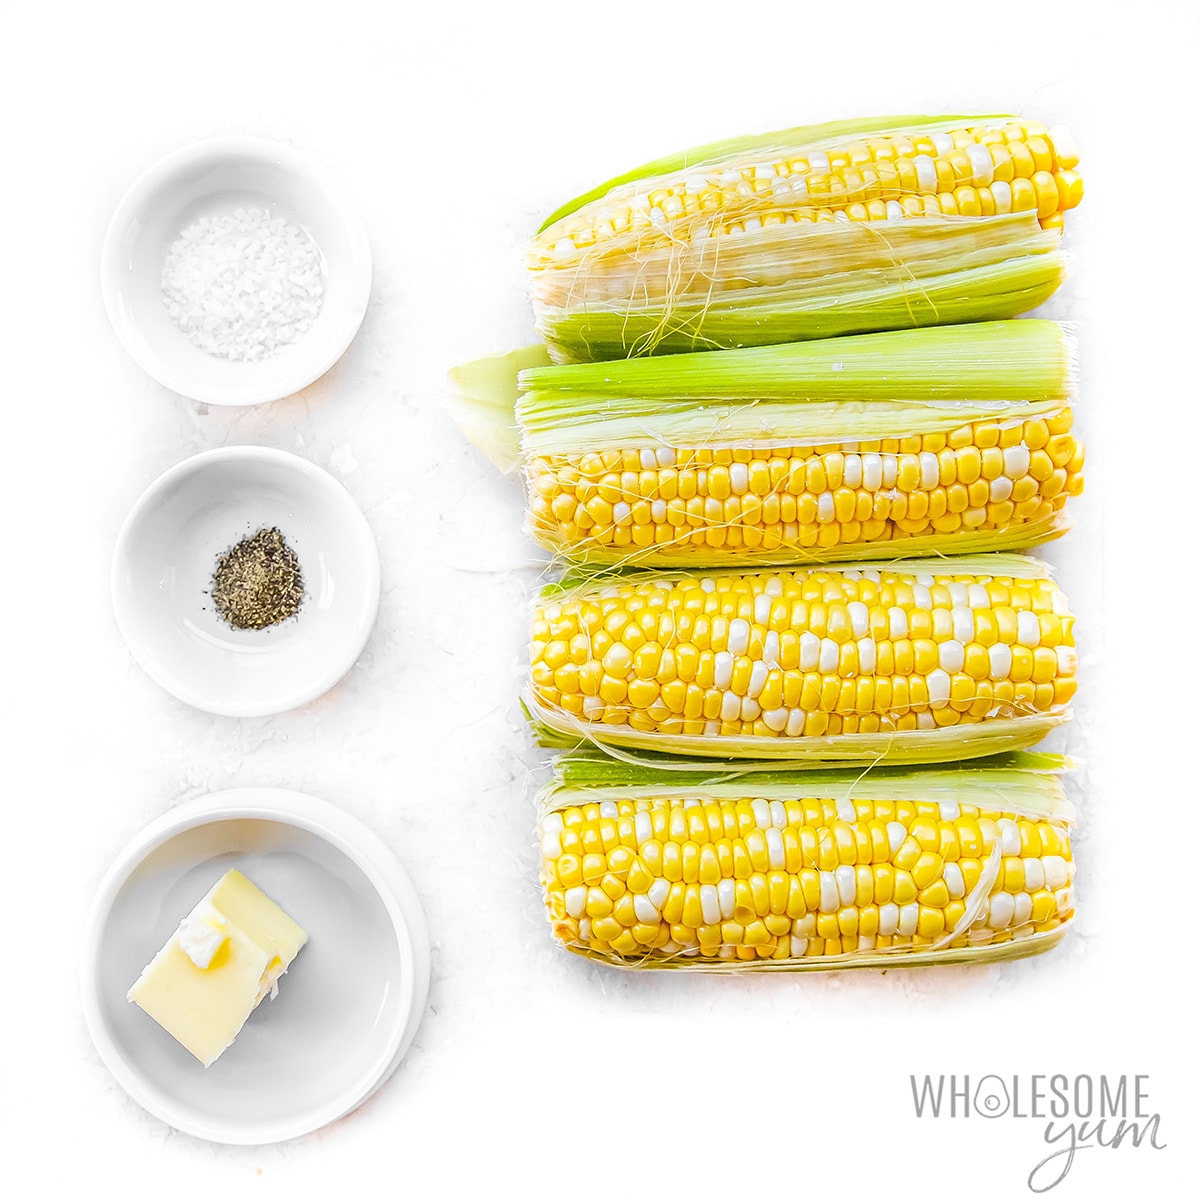 Instant Pot corn on the cob ingredients.